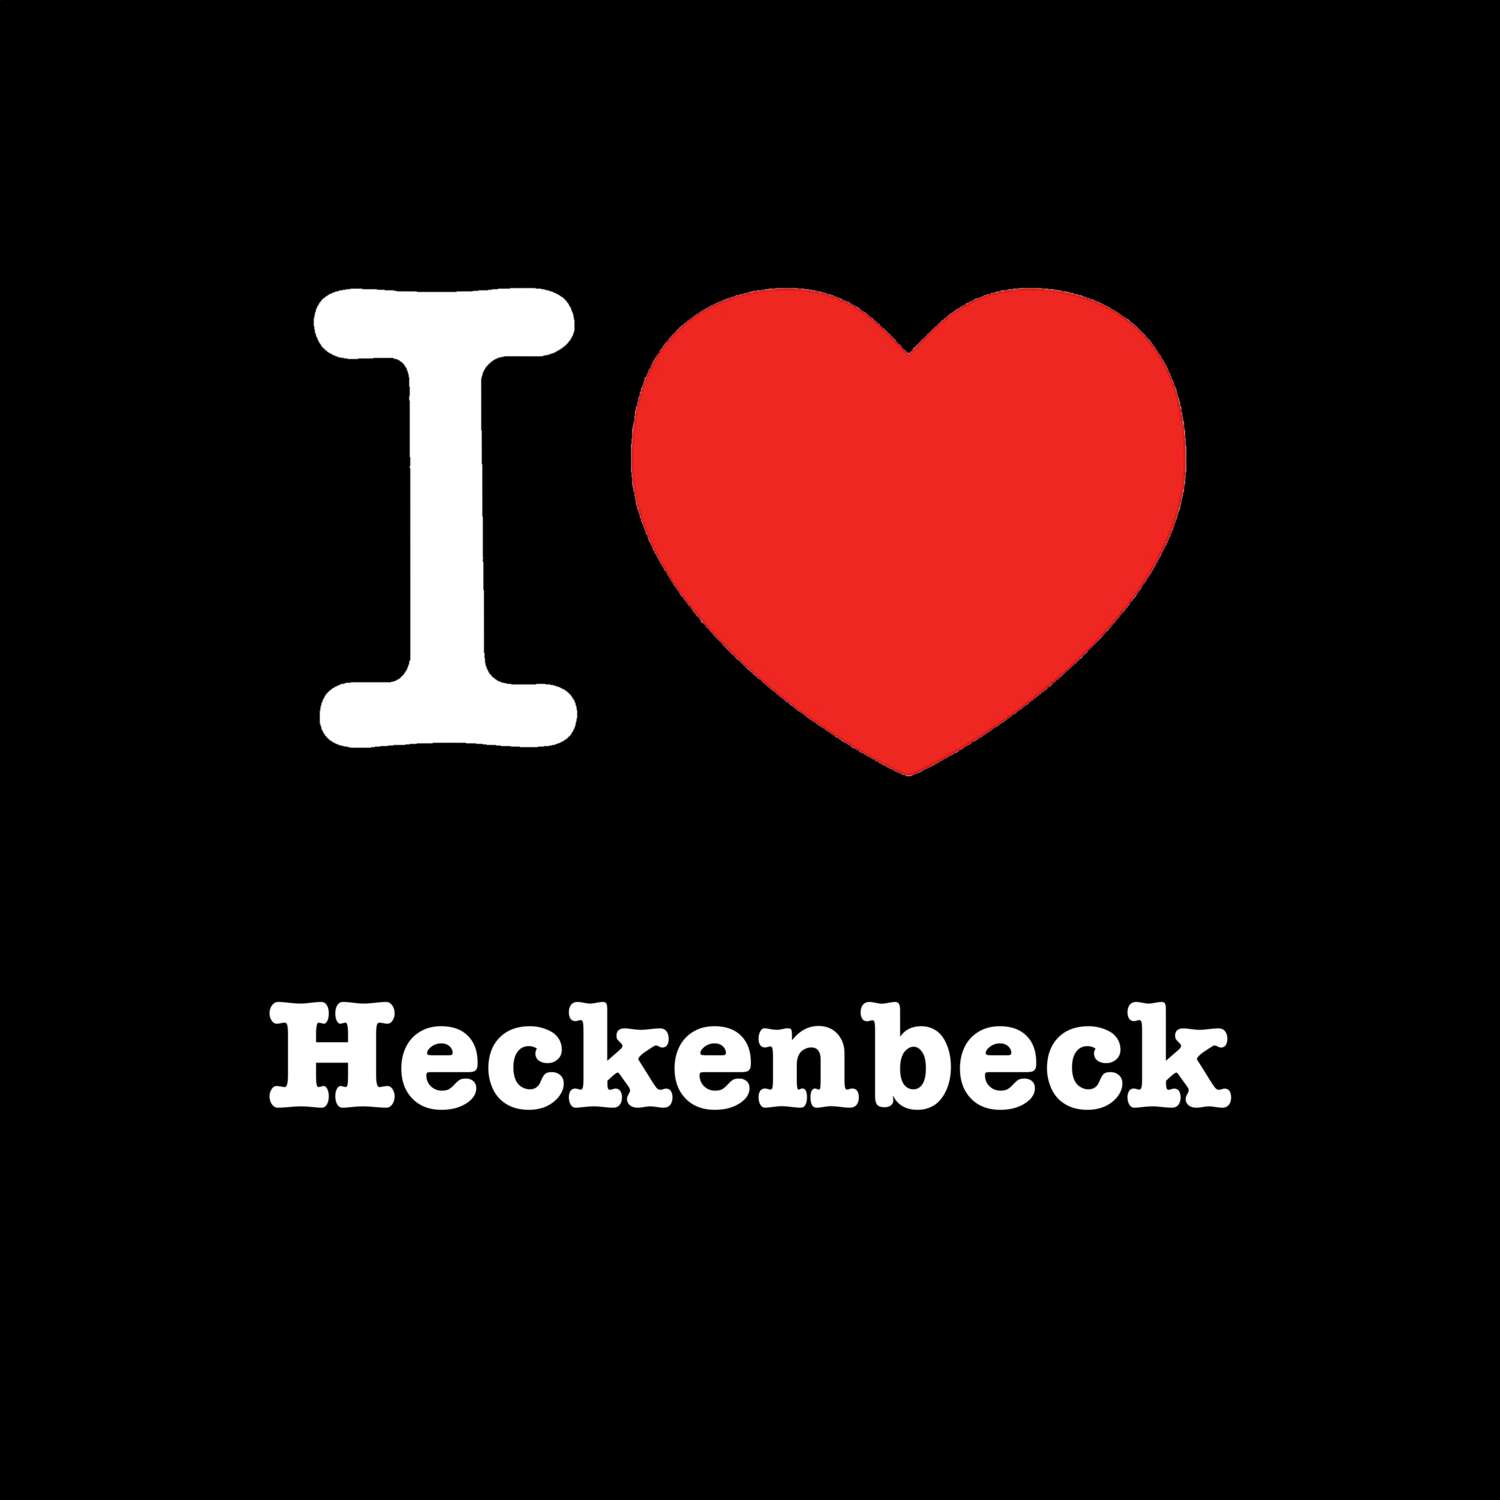 Heckenbeck T-Shirt »I love«